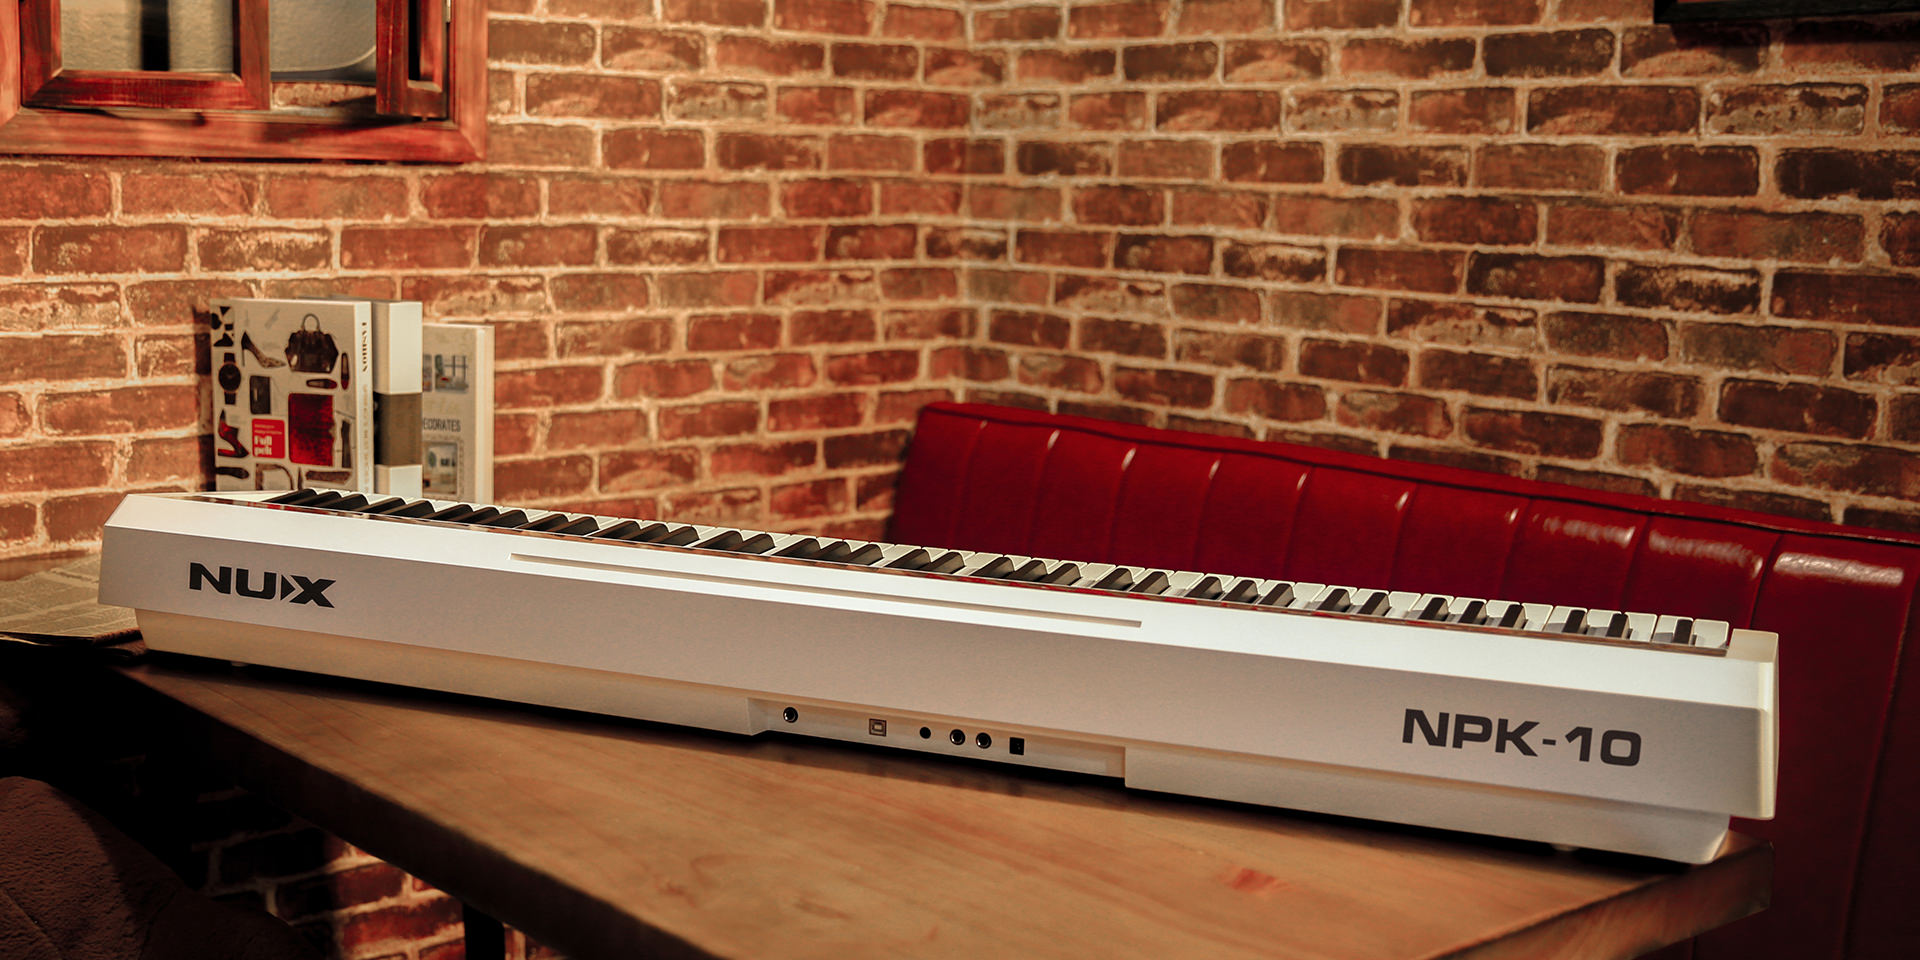 NUX NPK-10 SMART DIGITAL PIANO 88KEYS WHITE COLOR FREE KEYBOARD STAND, BENCH KB01-D90 & HEADPHONE, NUX, DIGITAL PIANO, nux-digital-piano-npk10-wh, ZOSO MUSIC SDN BHD